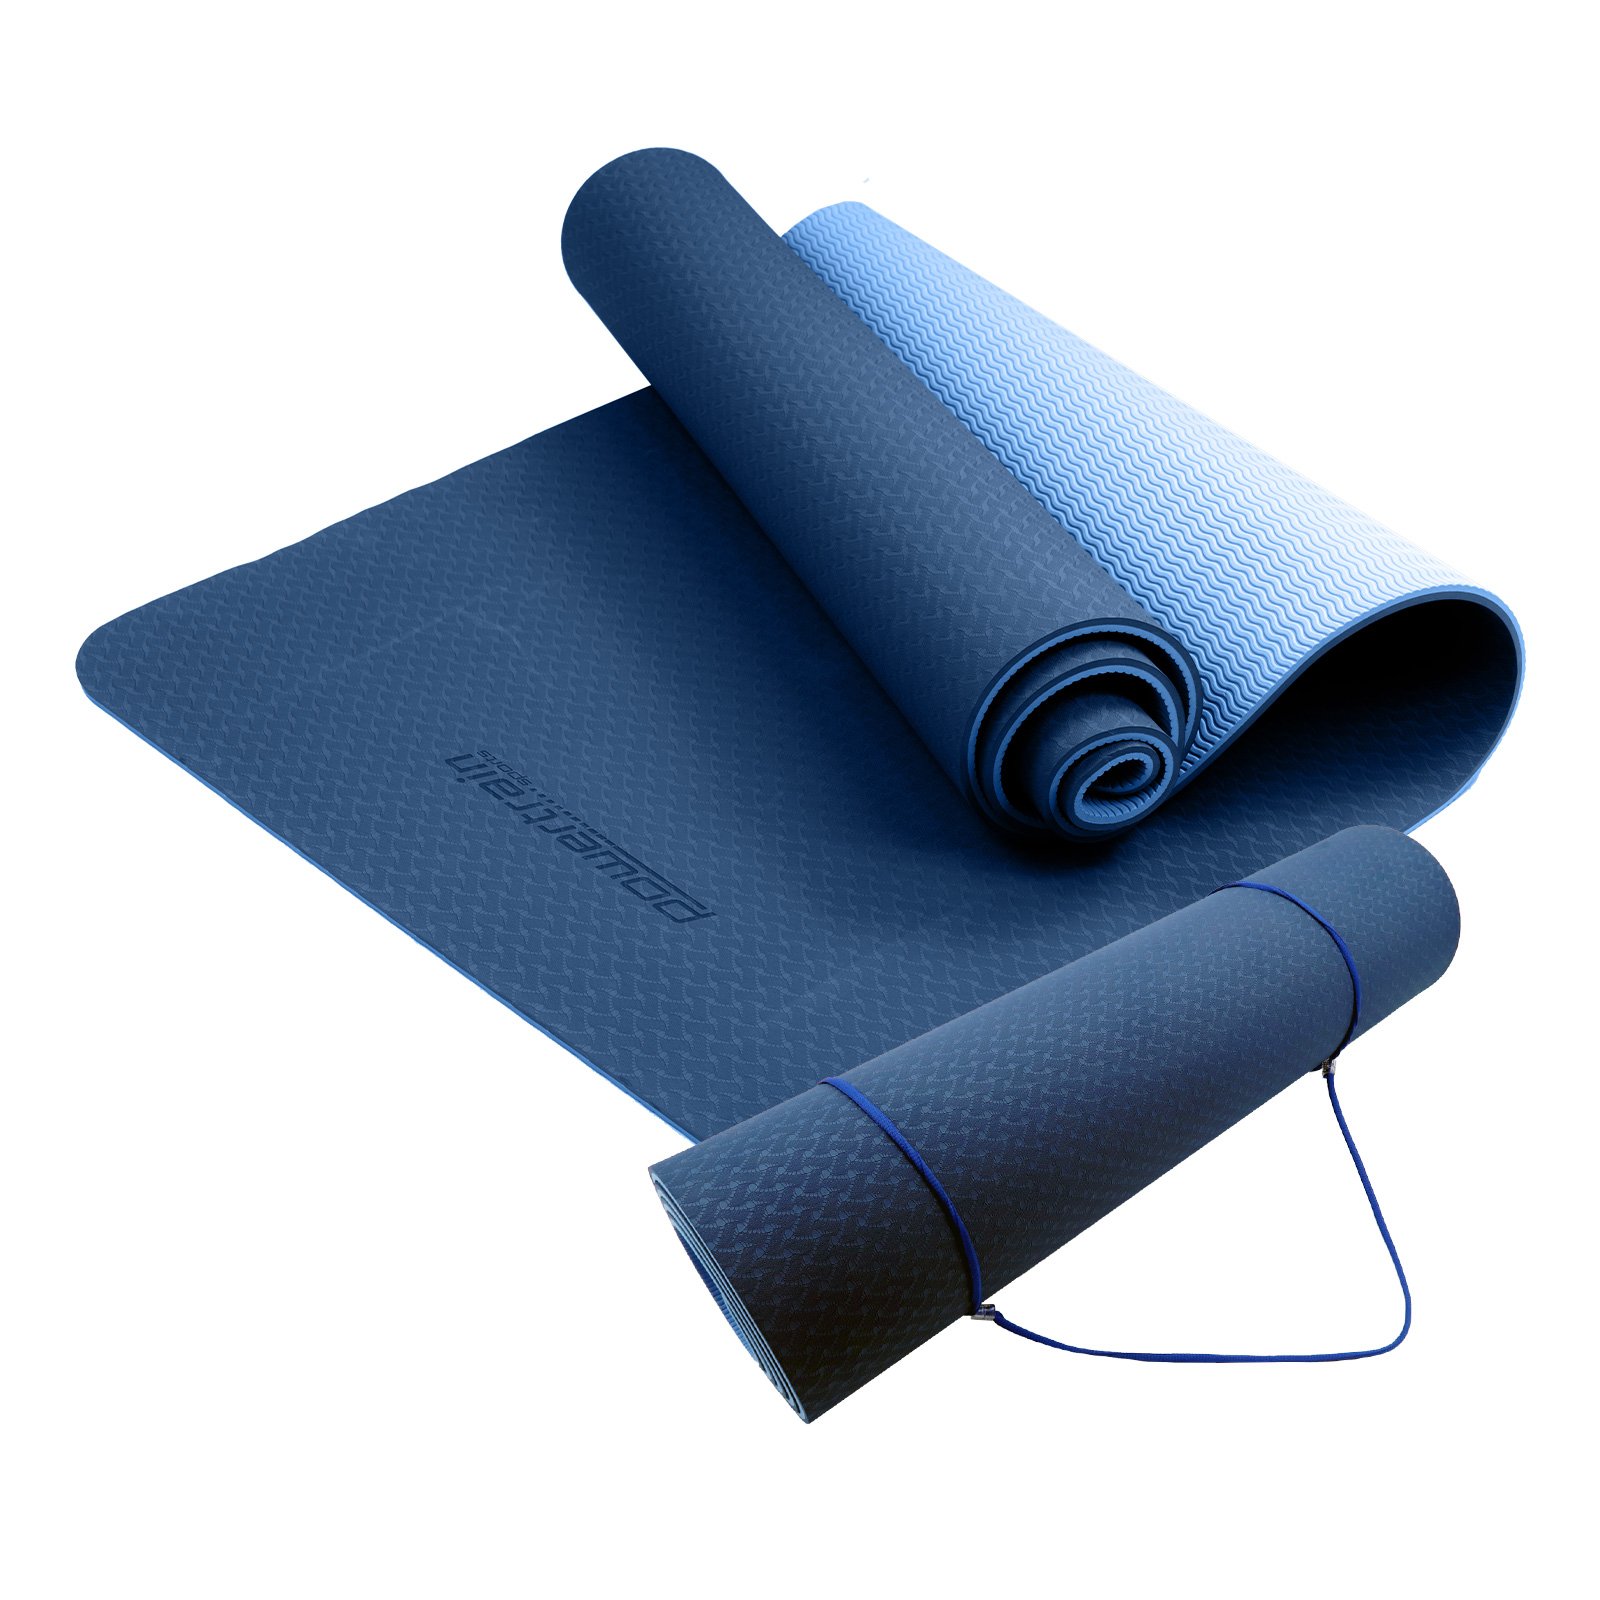 Powertrain Eco-Friendly TPE Pilates Exercise Yoga Mat 8mm - Dark Blue 1